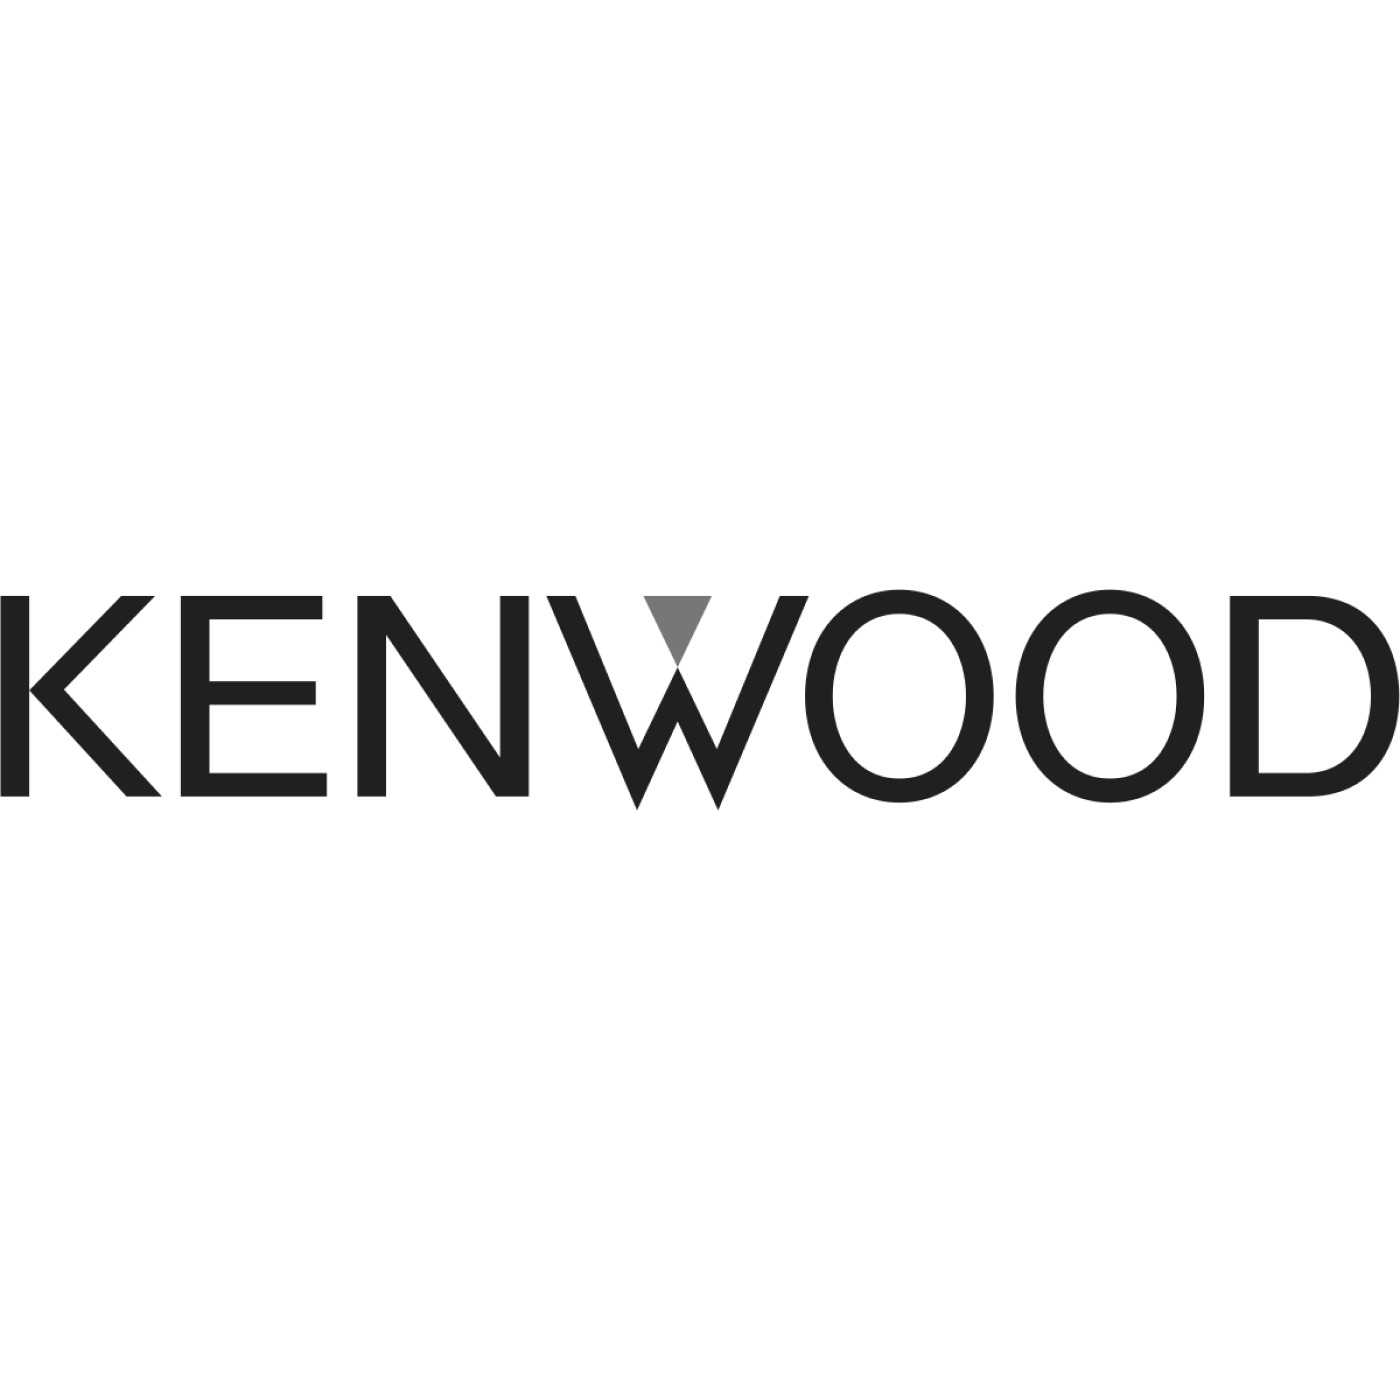 KENWOOD LOGO